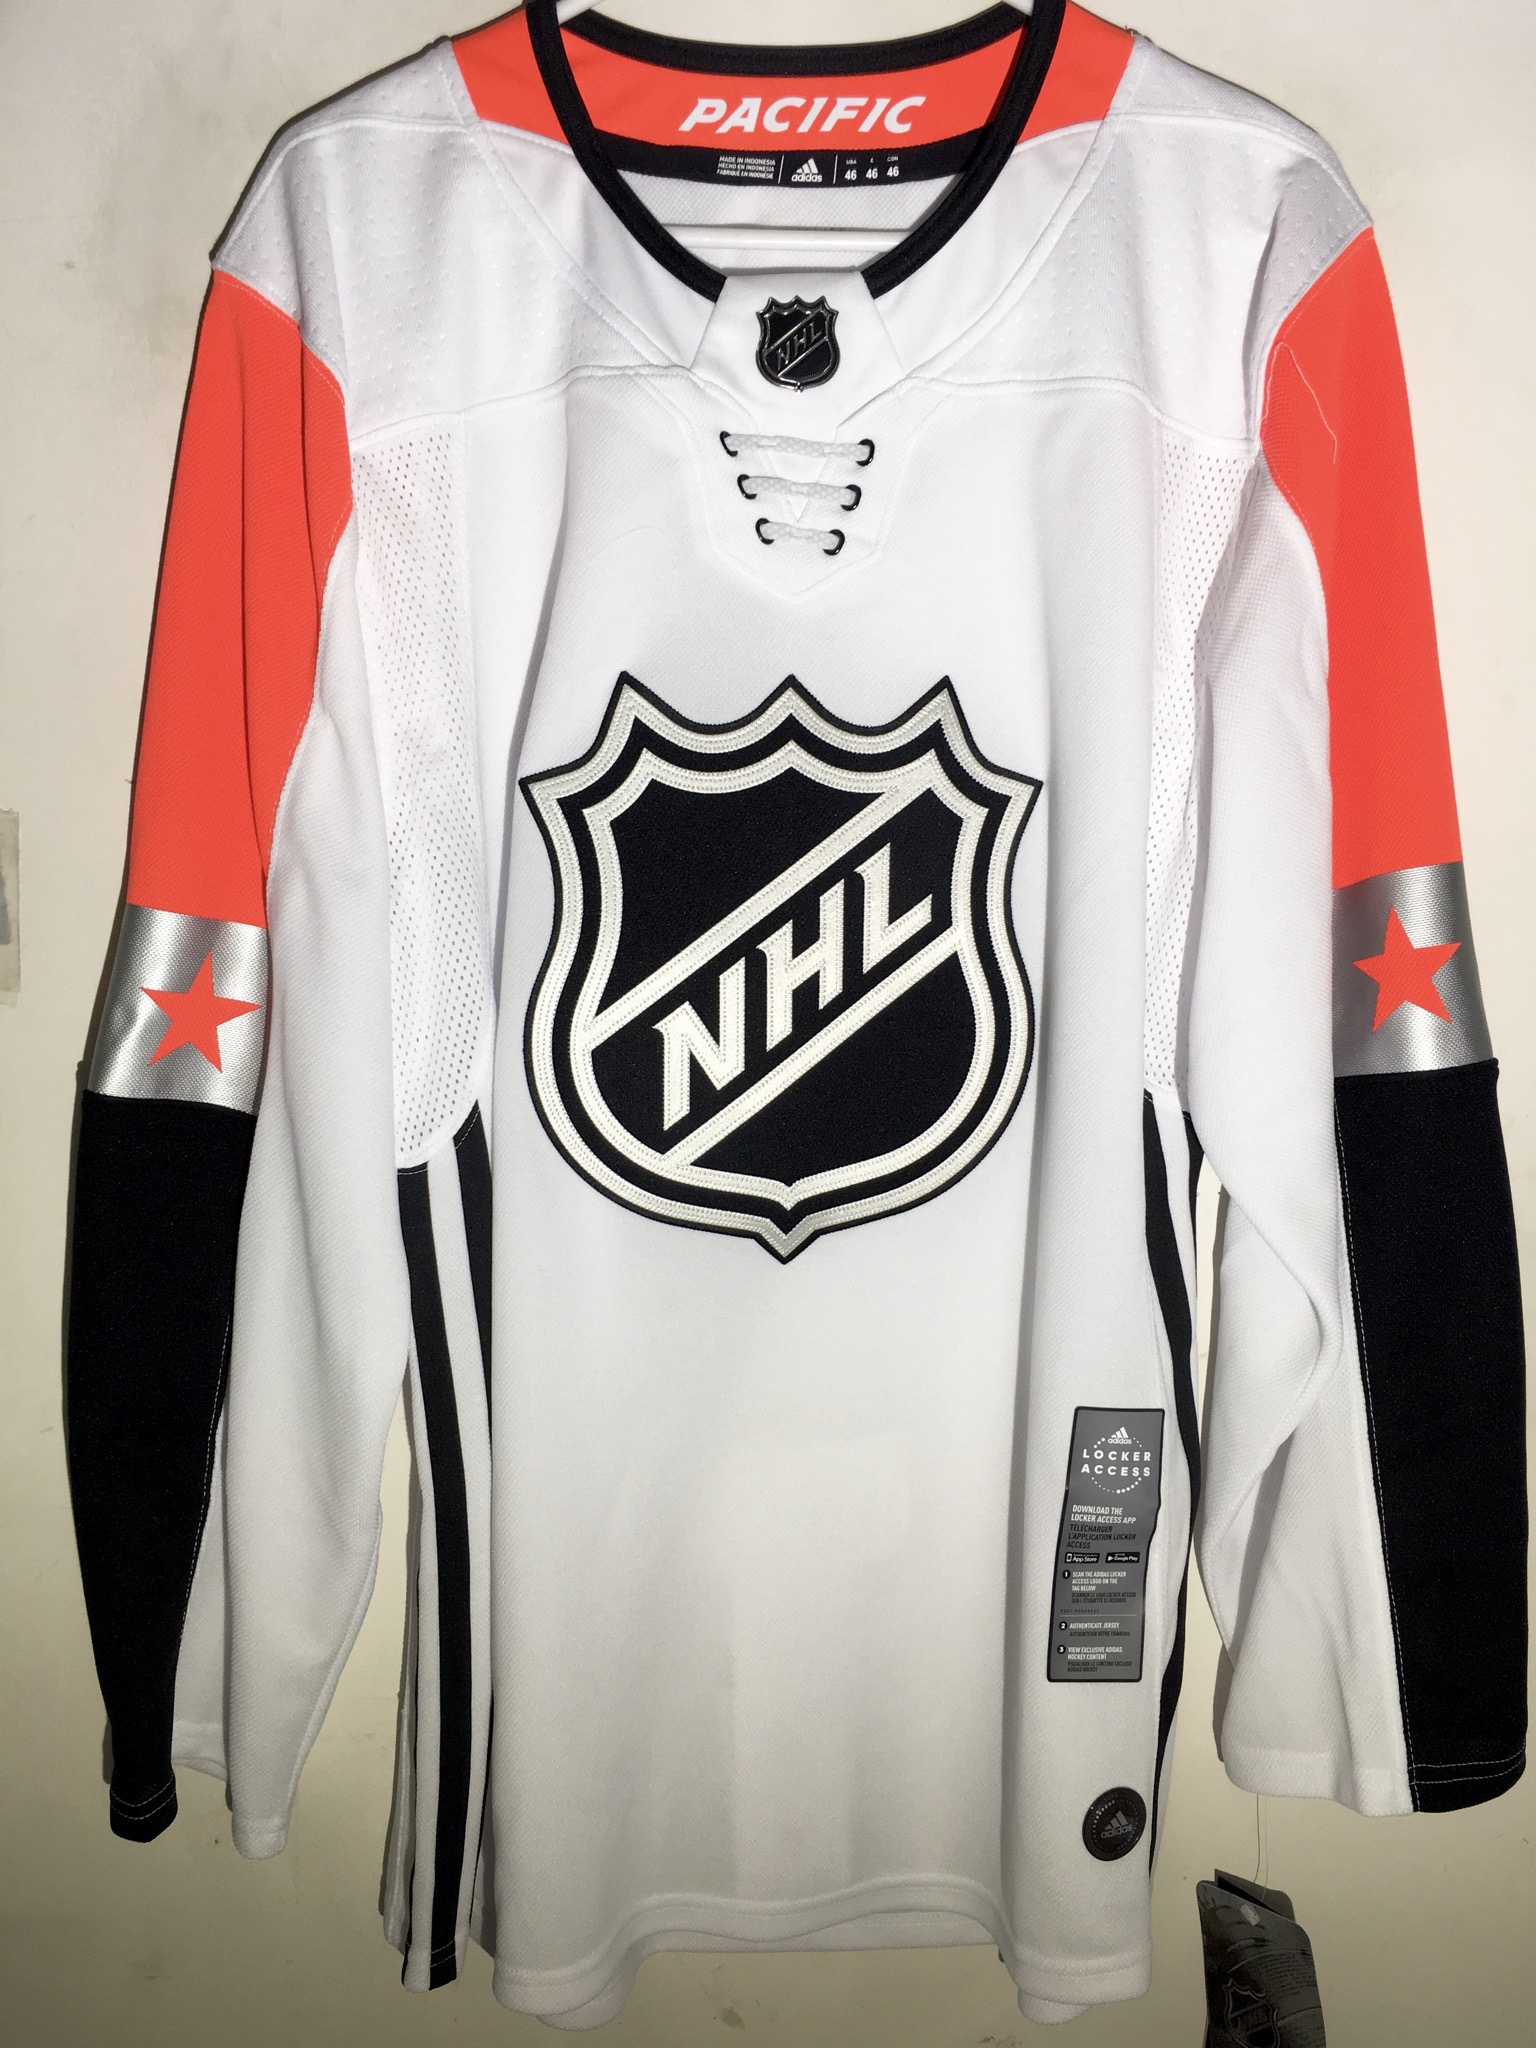 adidas Authentic NHL Jersey All-Star West Team White sz 54 | eBay